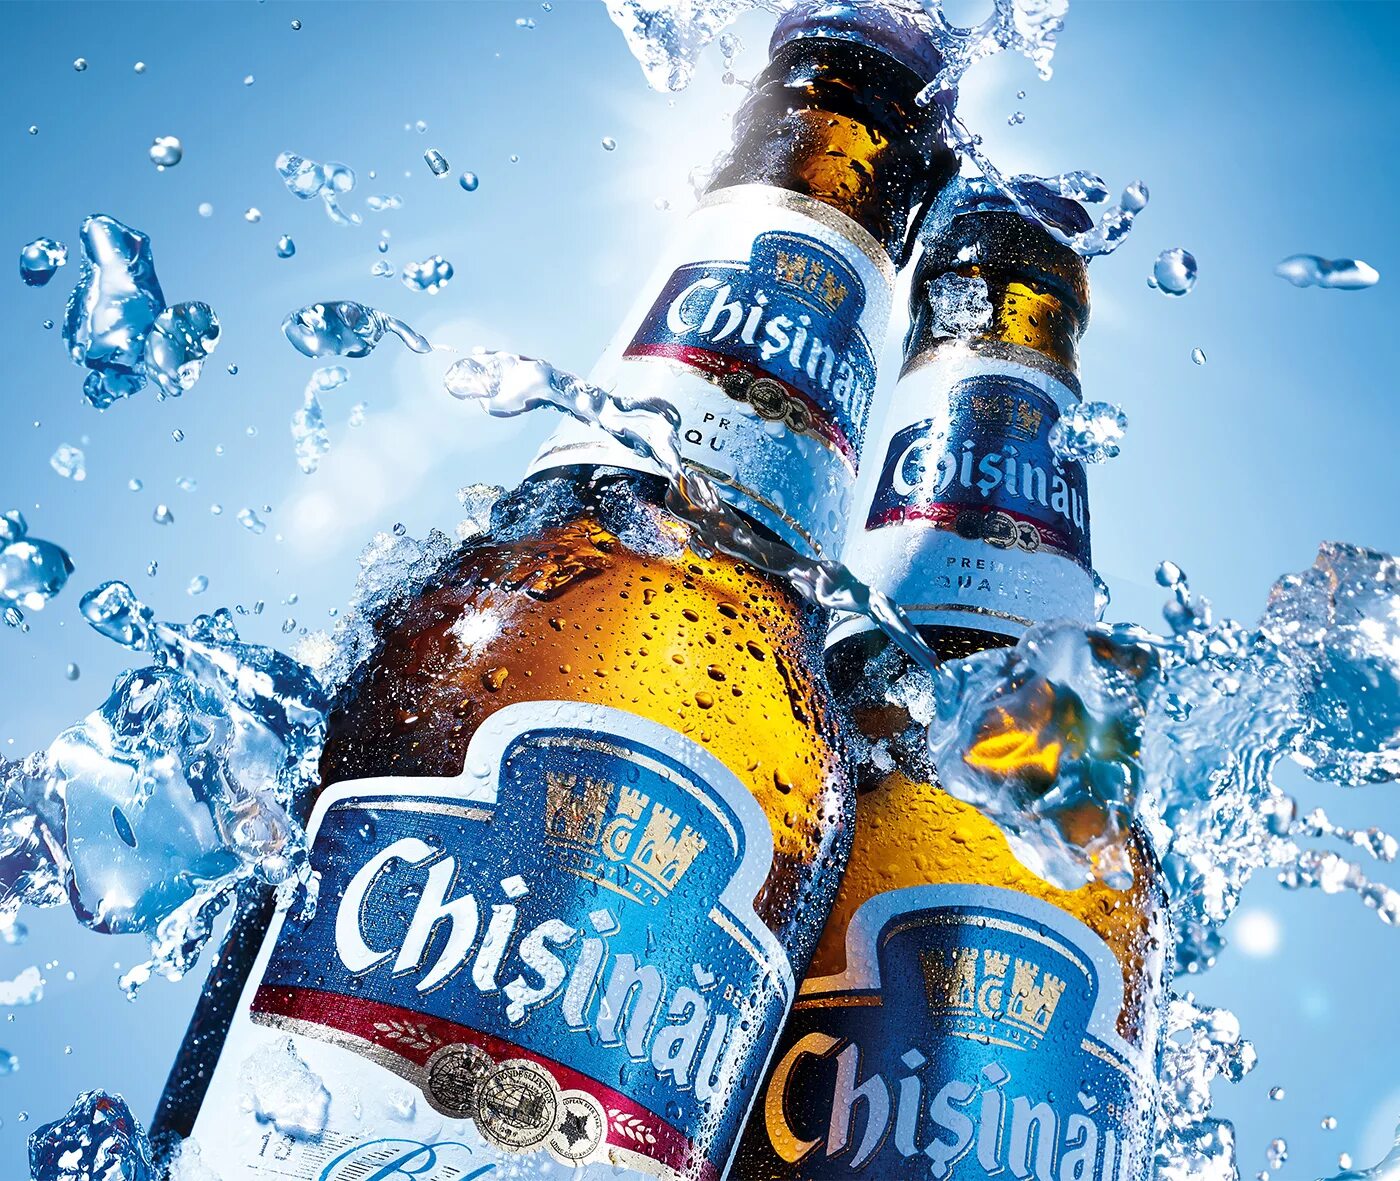 Айс бир. Чисинау Молдова пиво. Ледяное пиво. Пивные бренды. Пиво картинки.